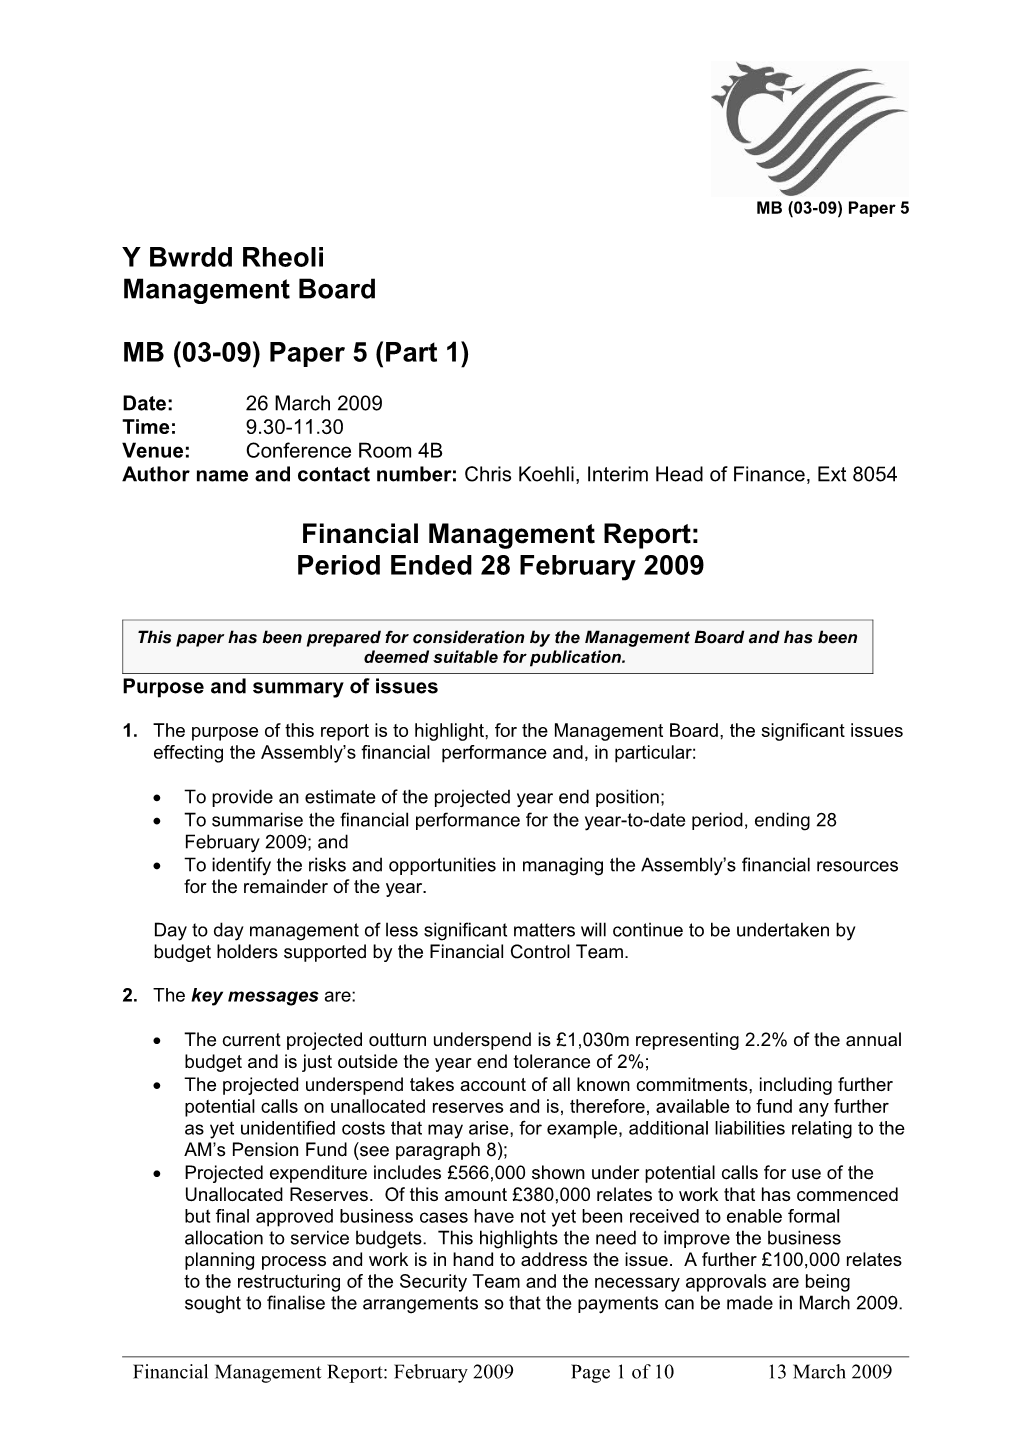 Mb__03-09__Paper 5 - Finance Report Part 1